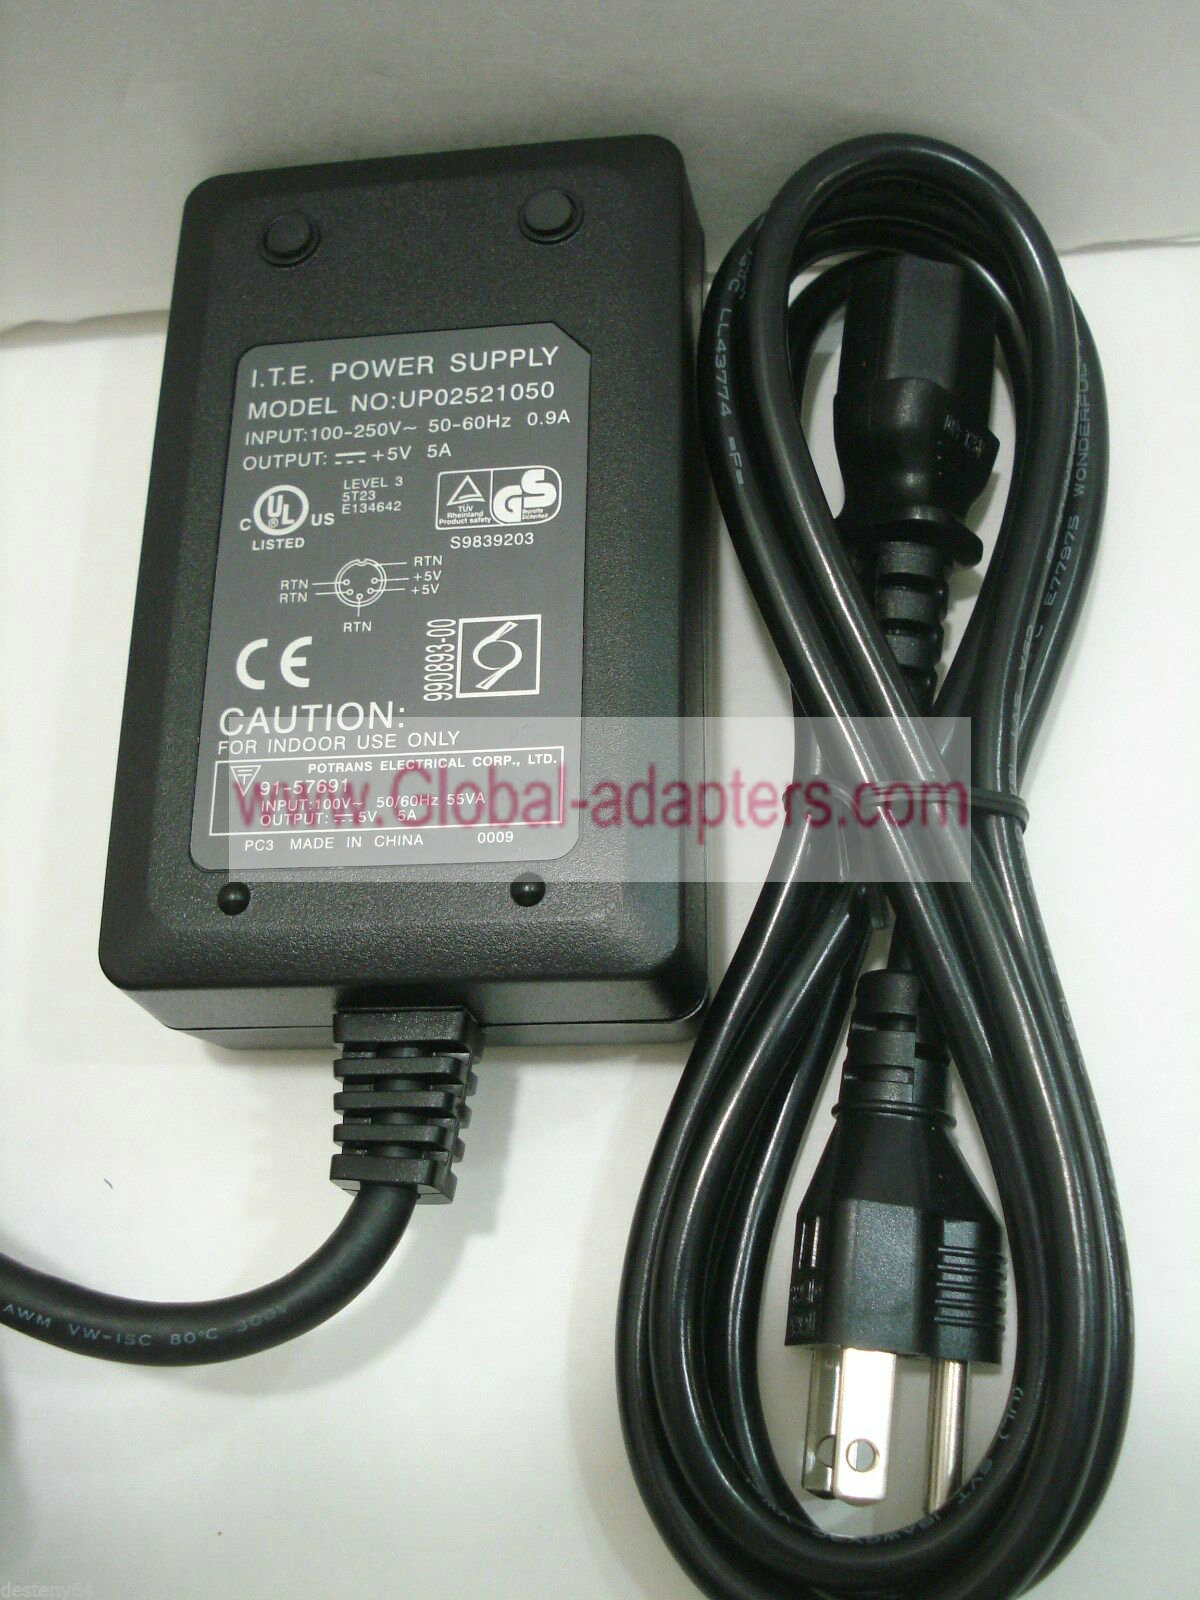 New I.T.E. 5V 5A Power Supply UP02521050 5-pin AC Adapter